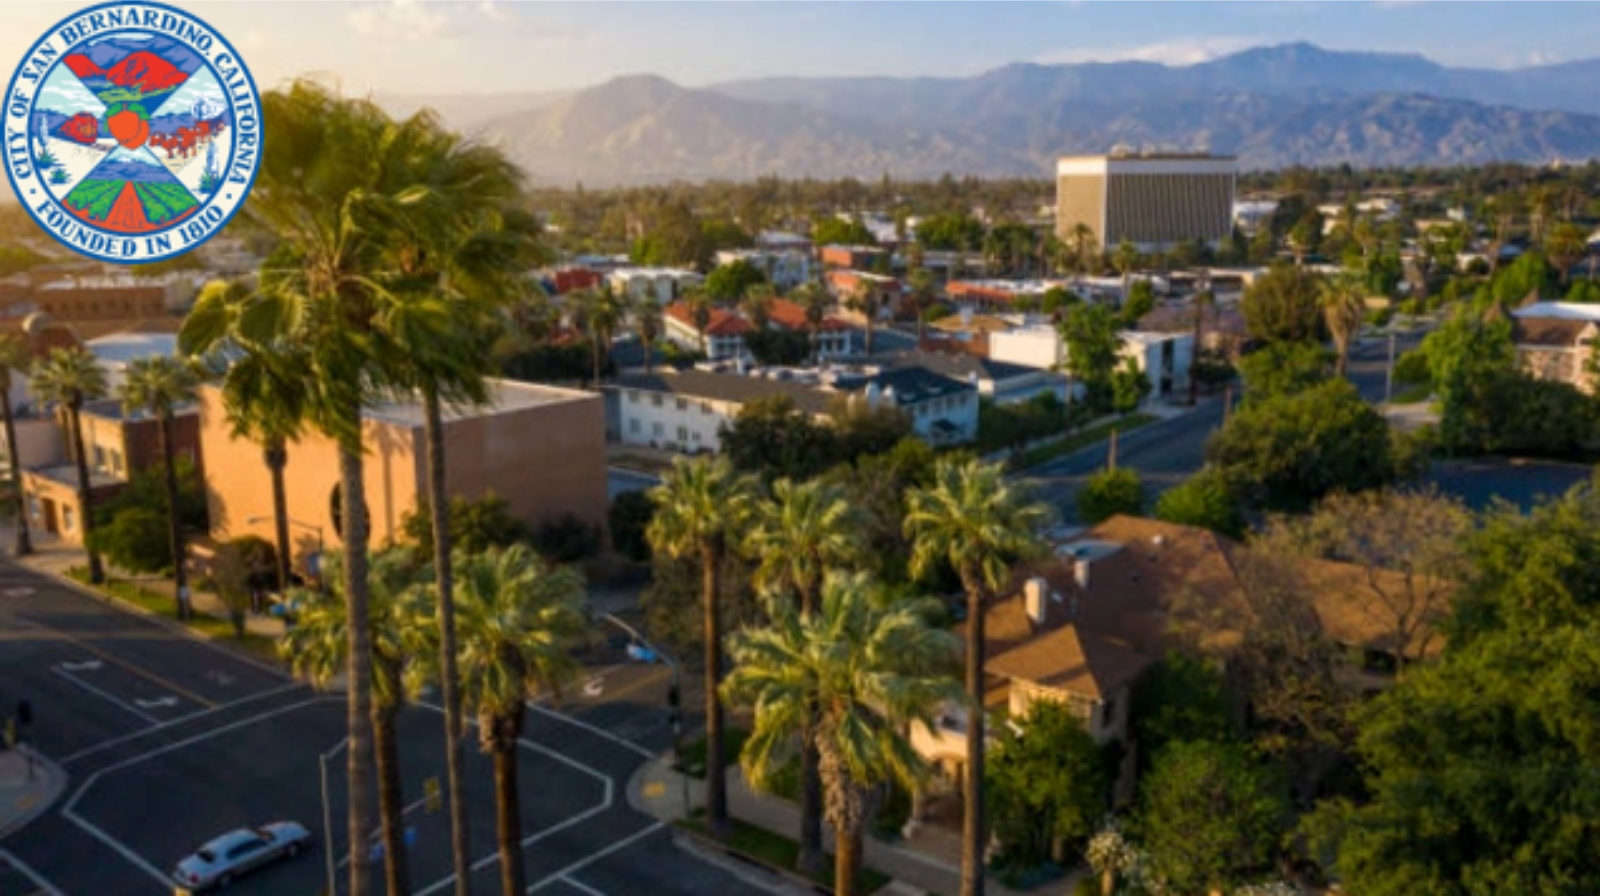 San Bernardino commercial real estate brokerage